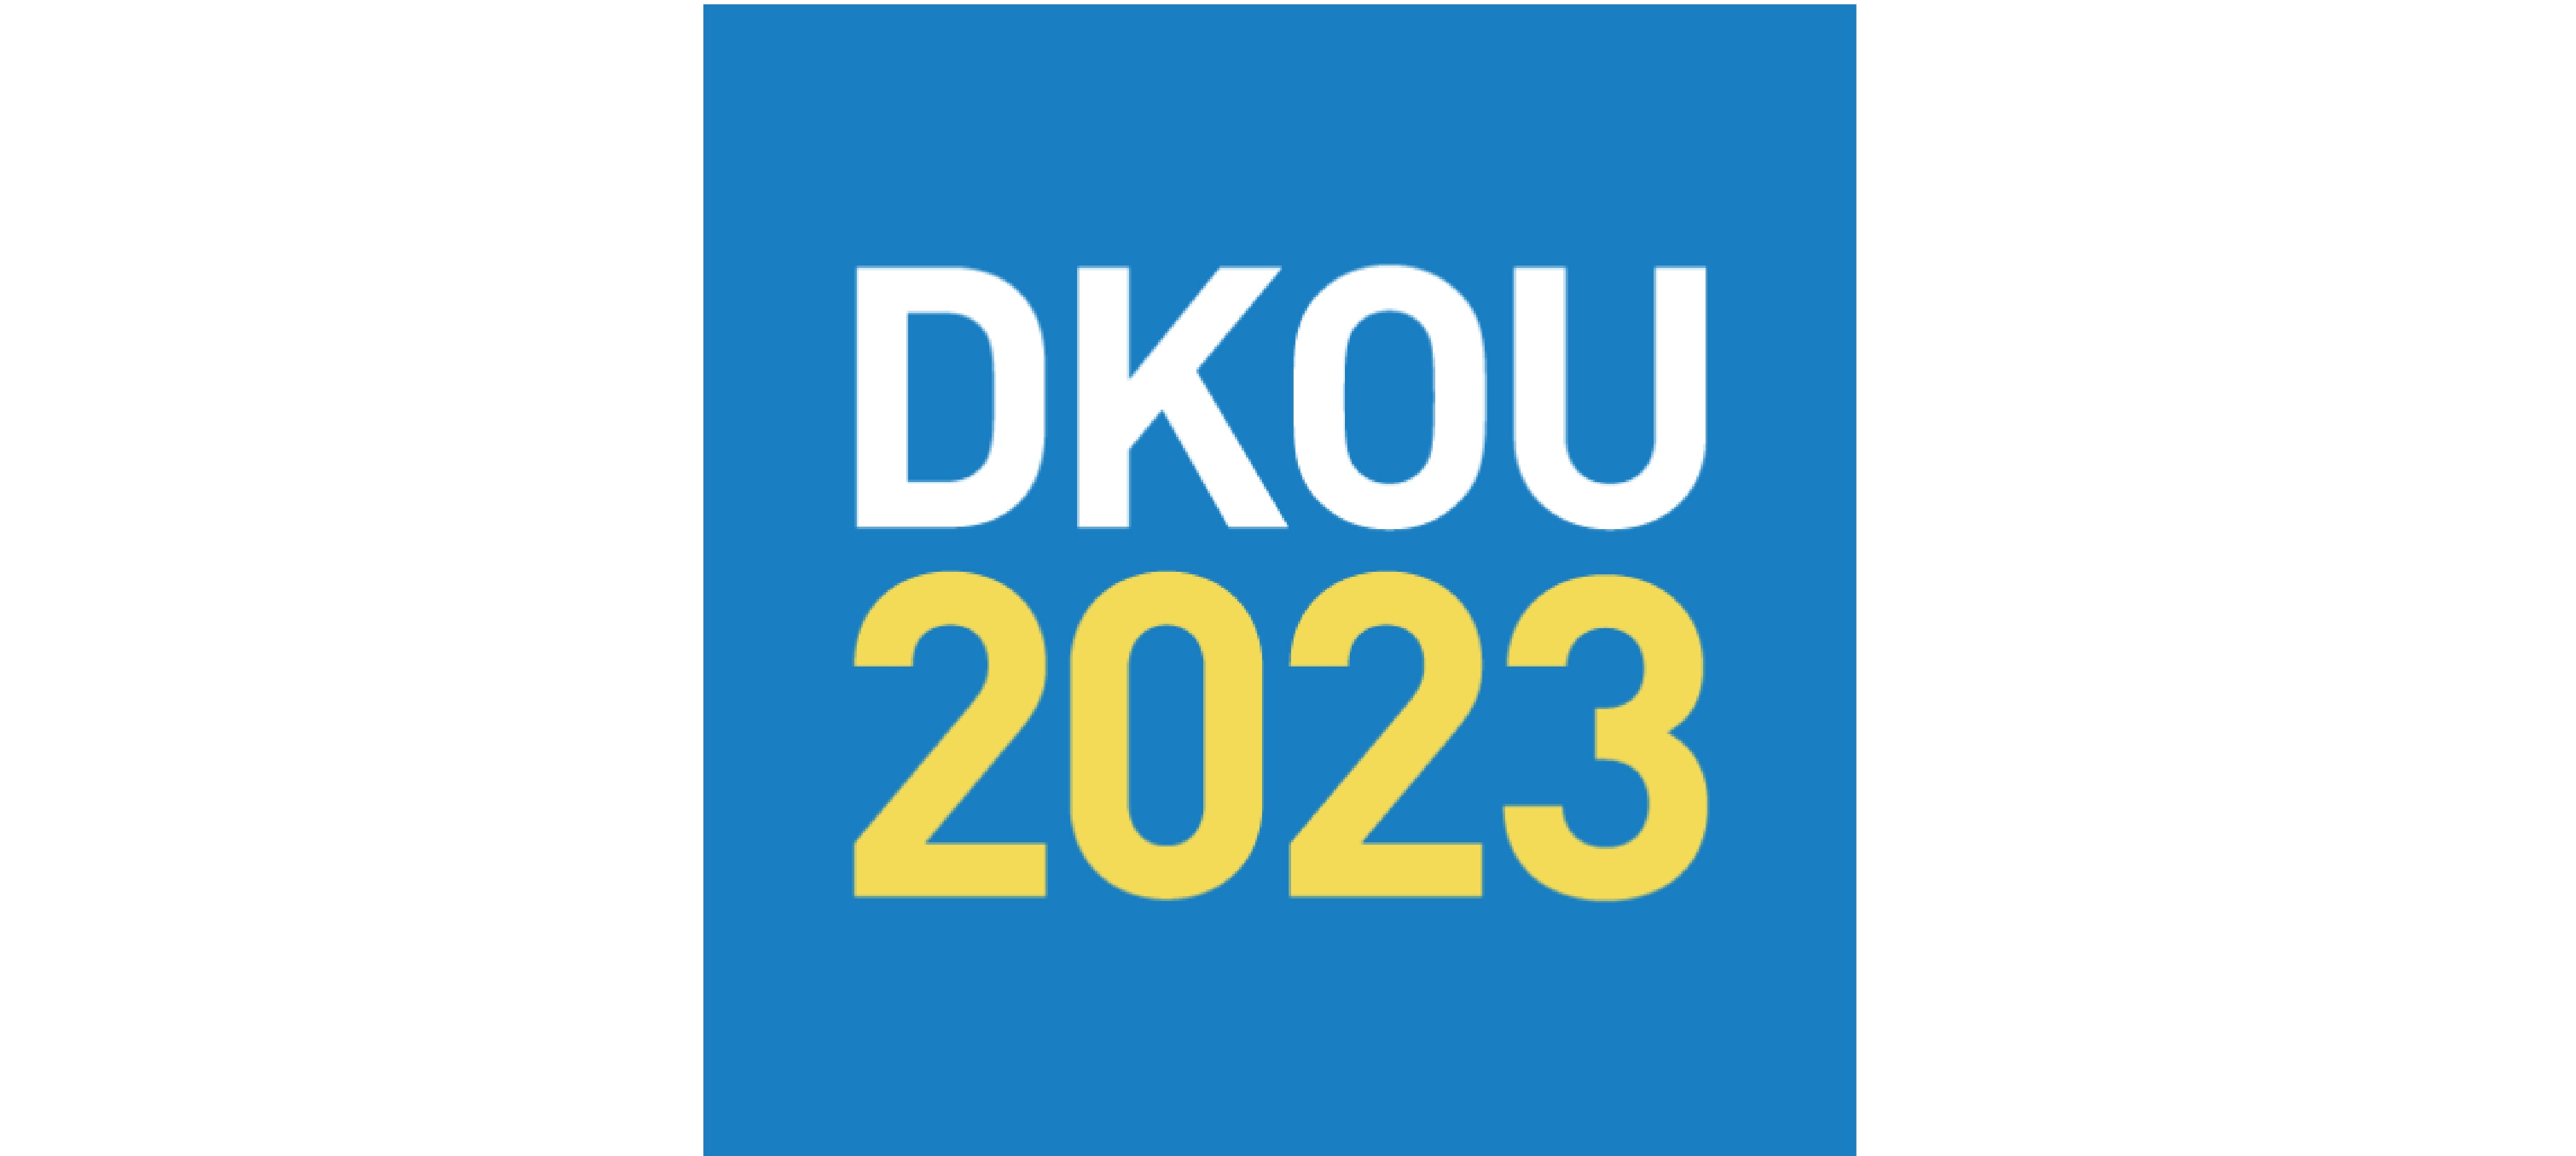 DKOU 2023